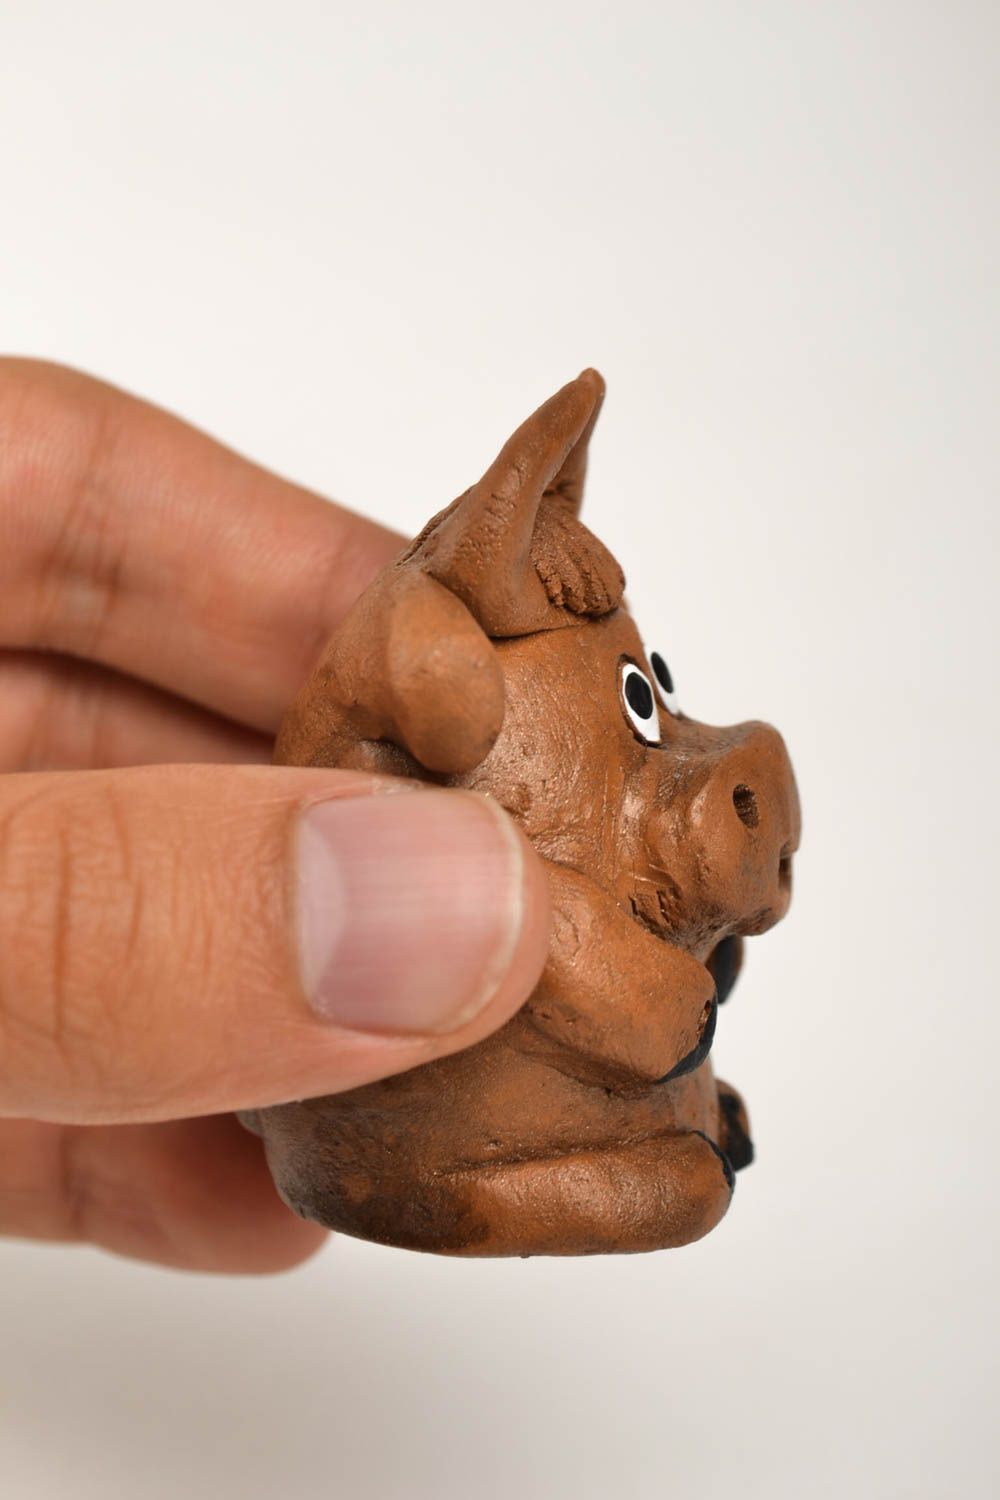 Handmade figurine decorative use only designer statuette clay figurine photo 5